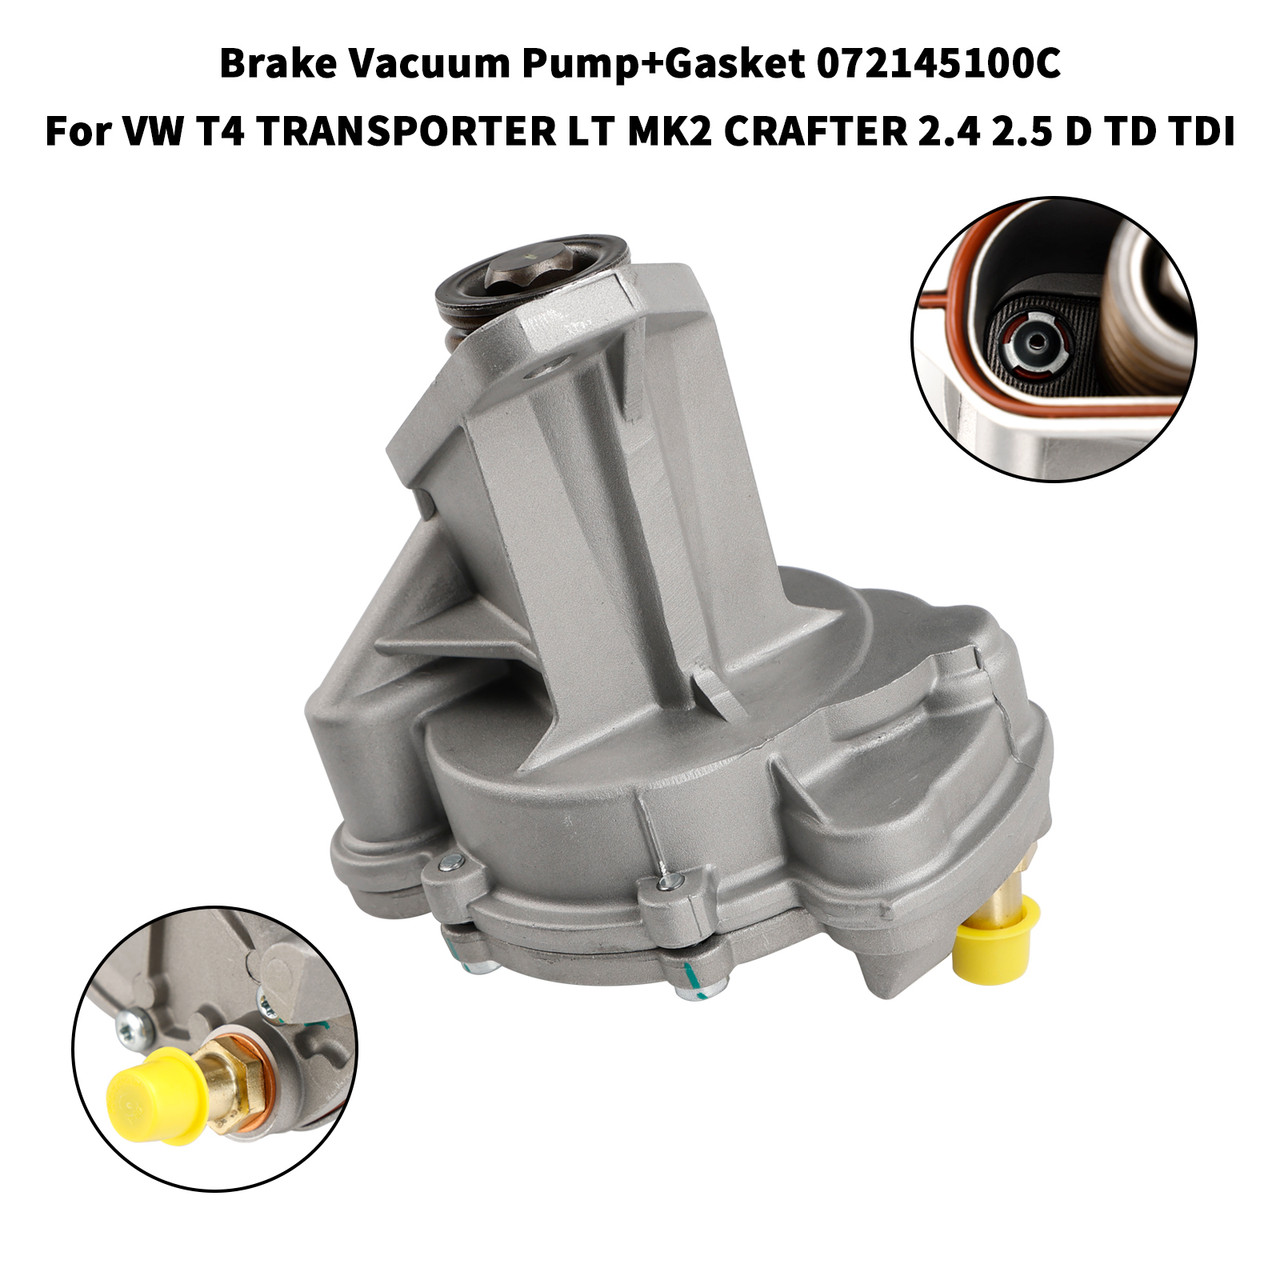 072145100C 2006-2013 VW Crafter Brake Vacuum Pump+Gasket 072145100C